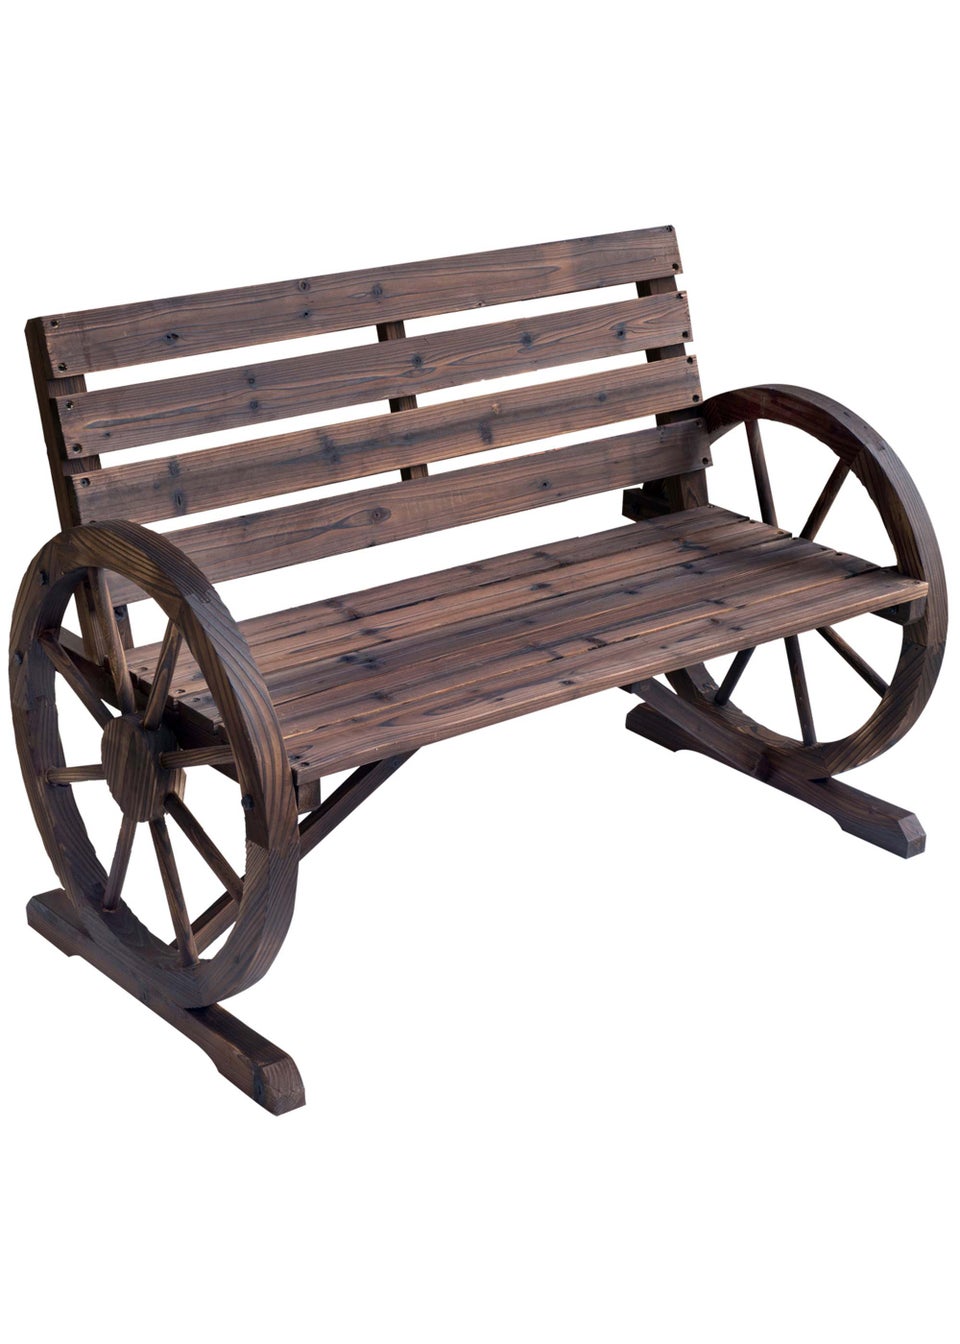 Outsunny 2 Seater Garden Bench Outdoor Garden Armrest Chair with Wooden Cart Wagon Wheel